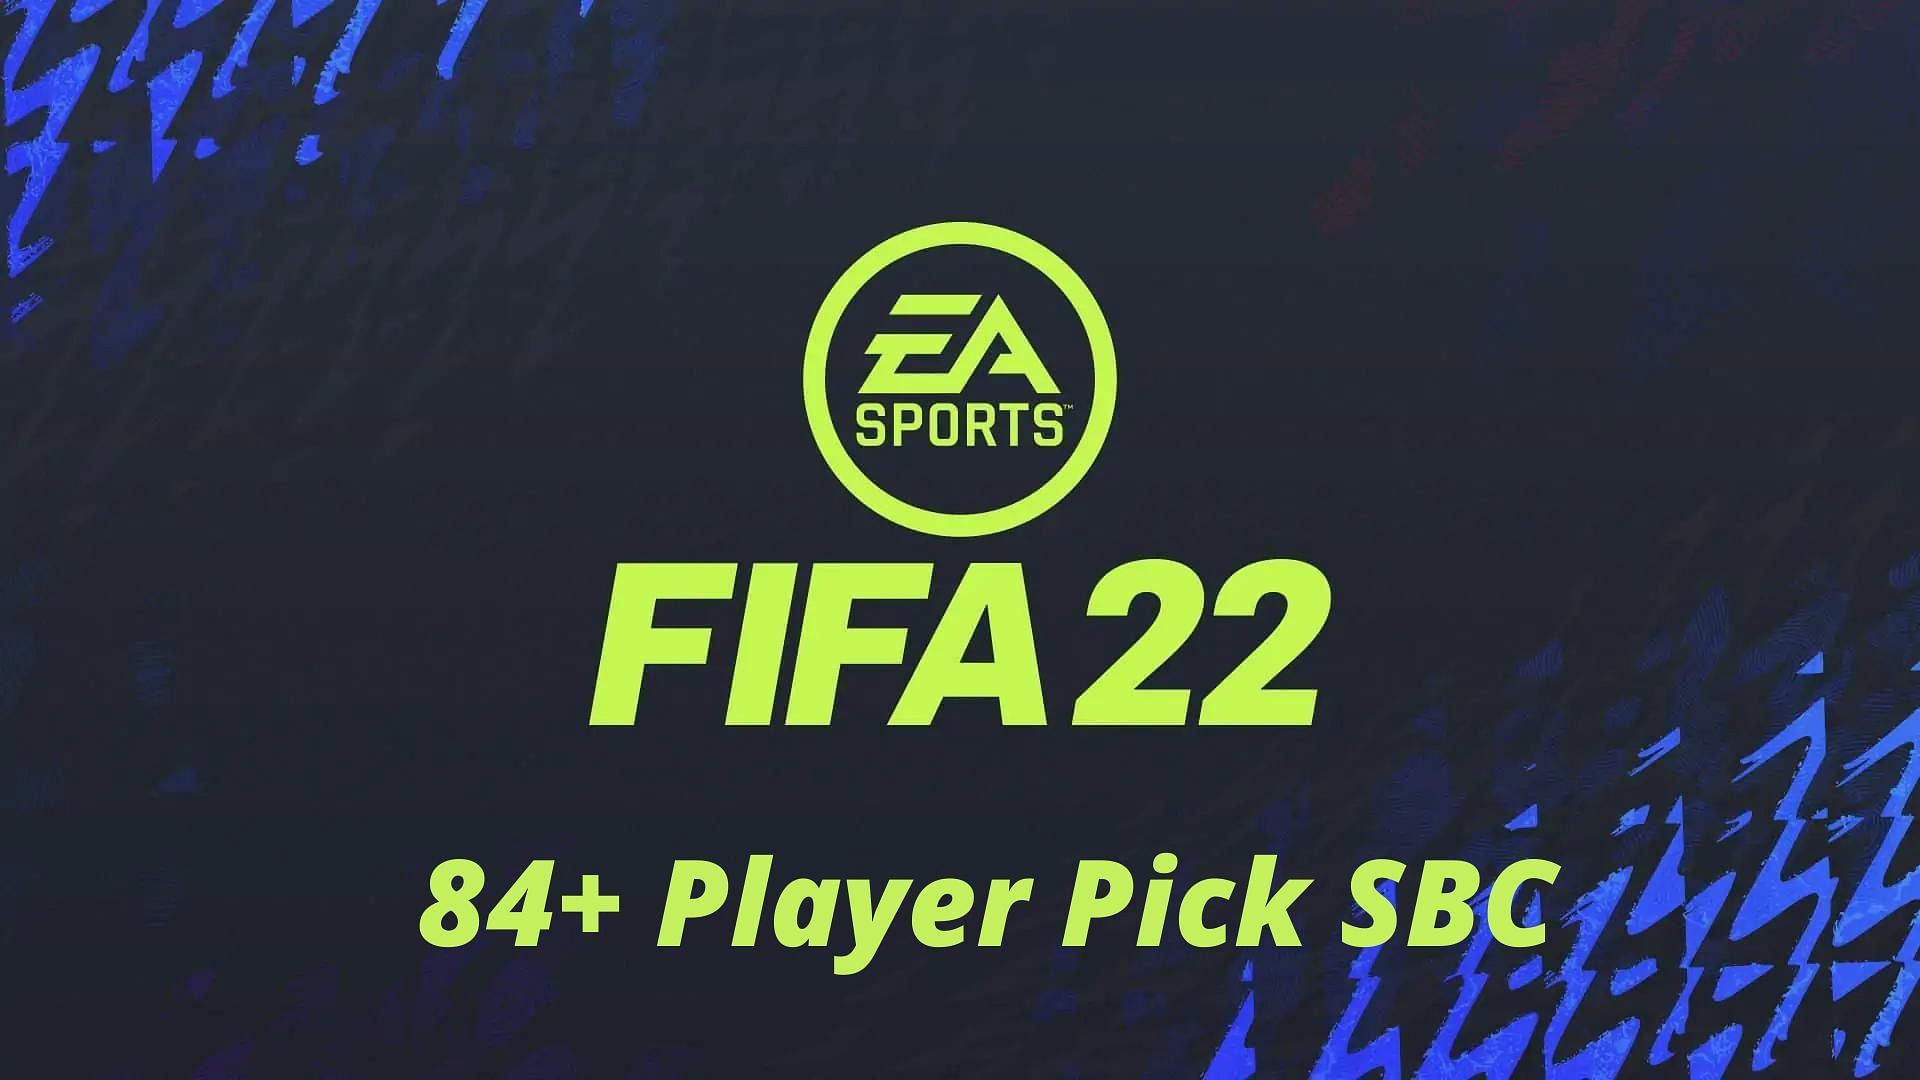 84+ Player Pick SBC is now live in FIFA 22 (Image via Sportskeeda)